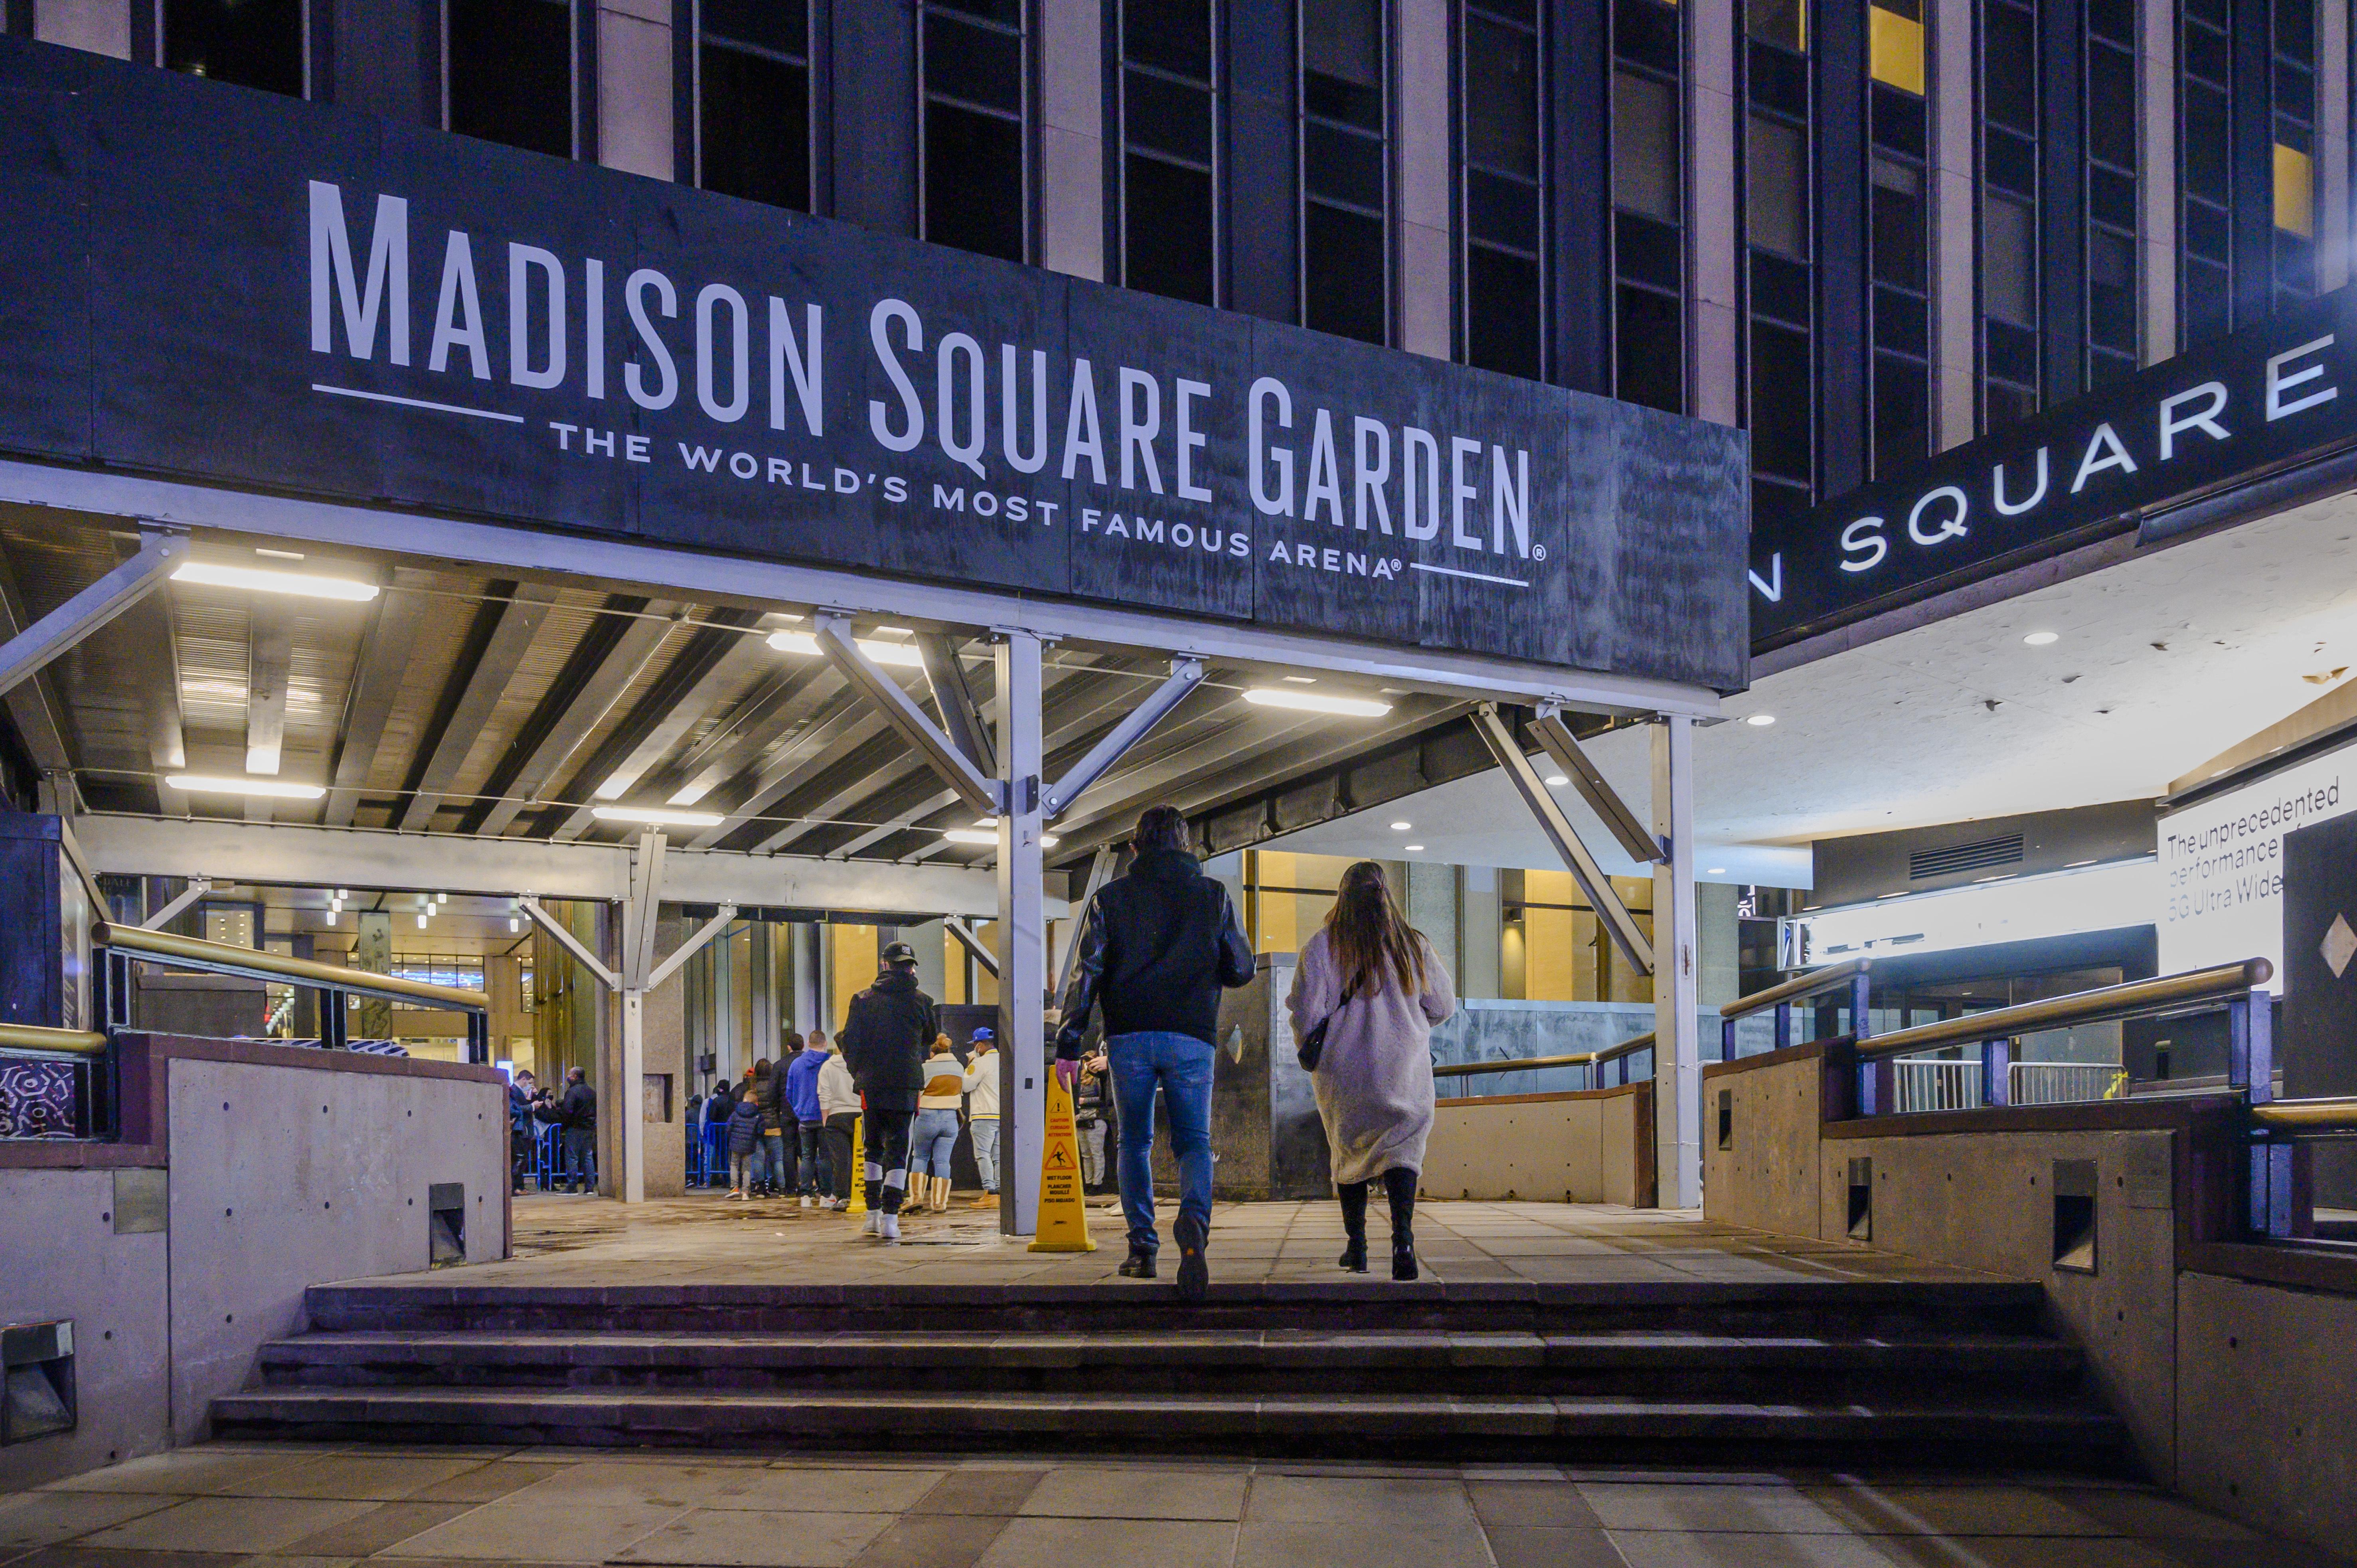 NY Knicks fans return to Madison Square Garden - Kuwait Times